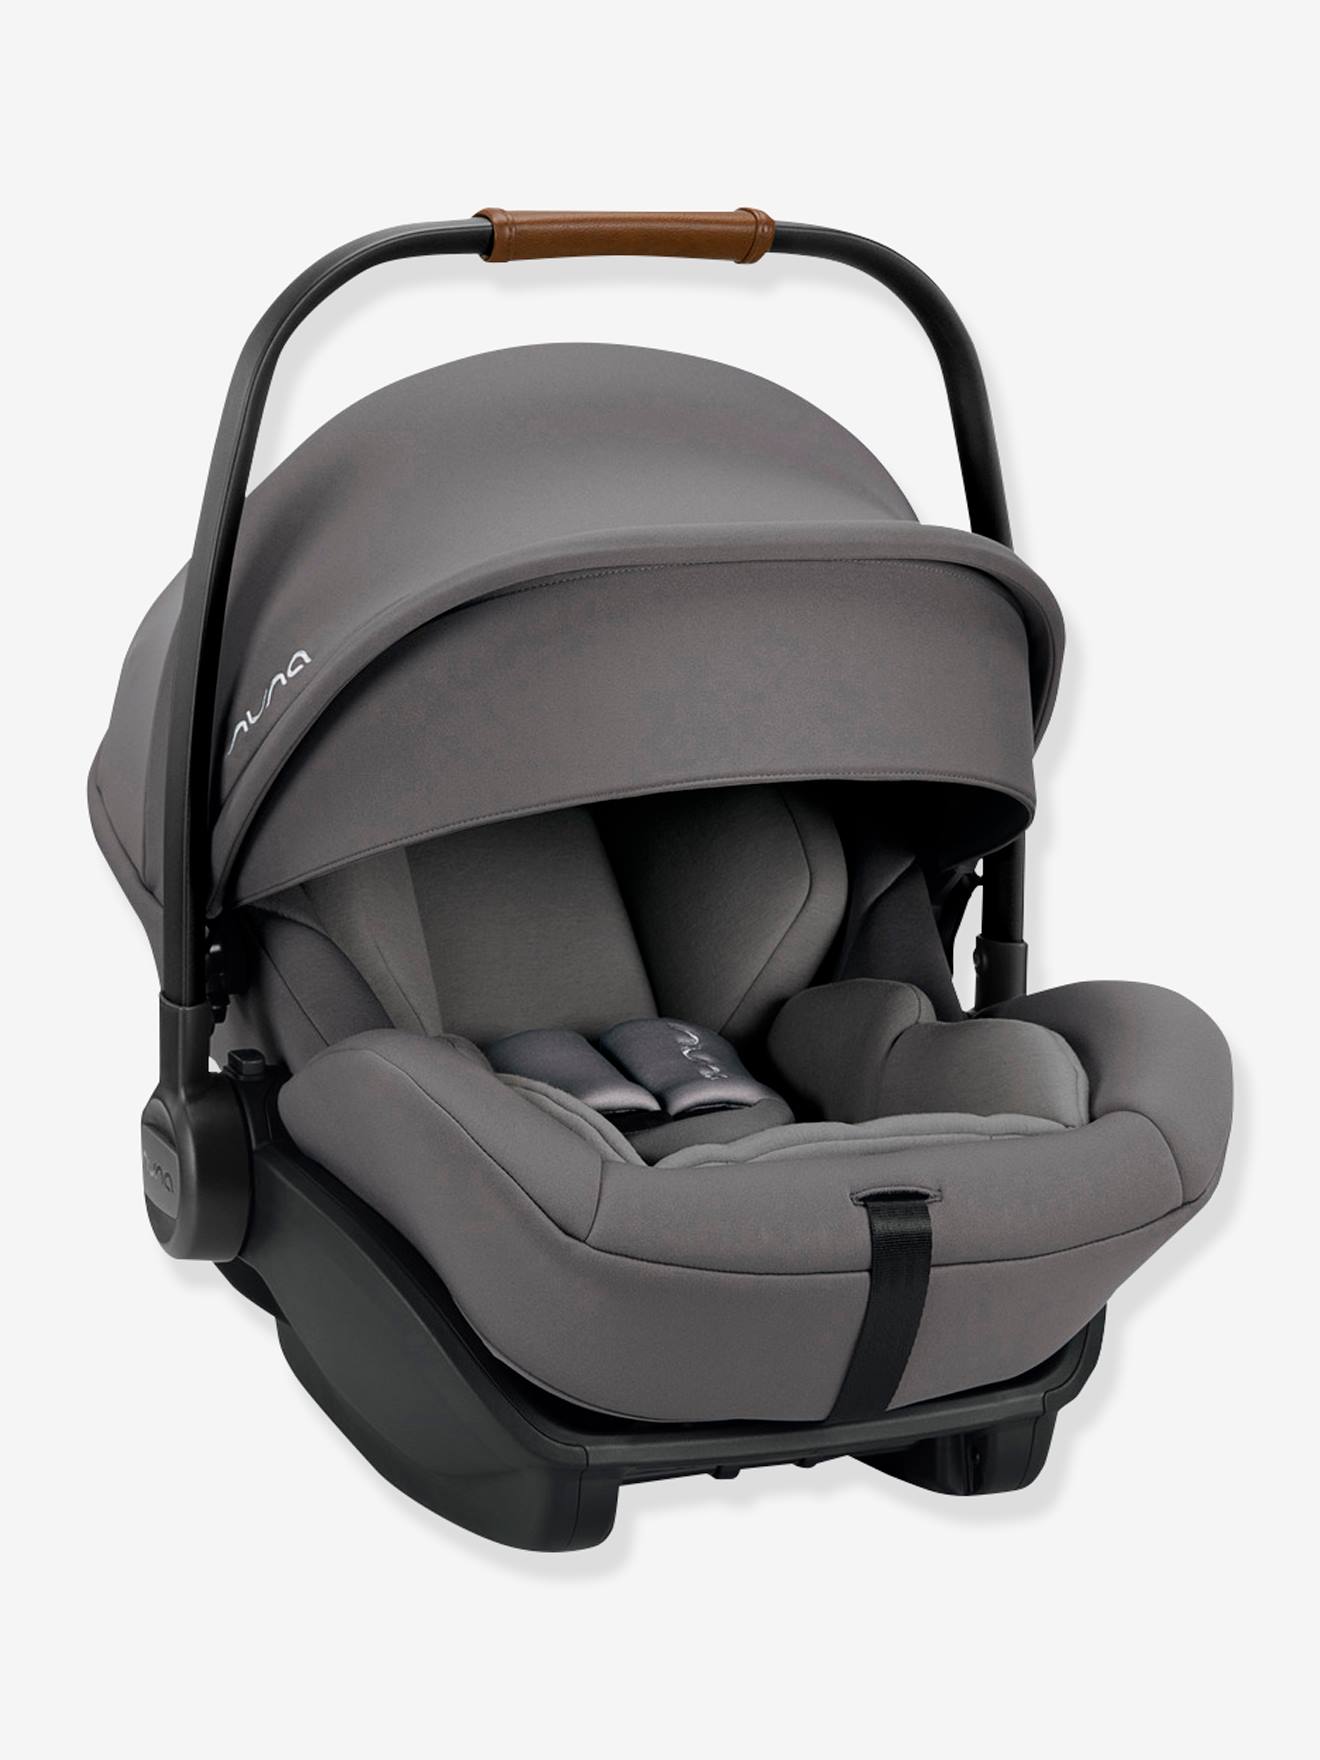 Outils d'implémentation d'une stratégie Baby & Kind Babyartikel Babyschalen & Kindersitze Kindersitze 